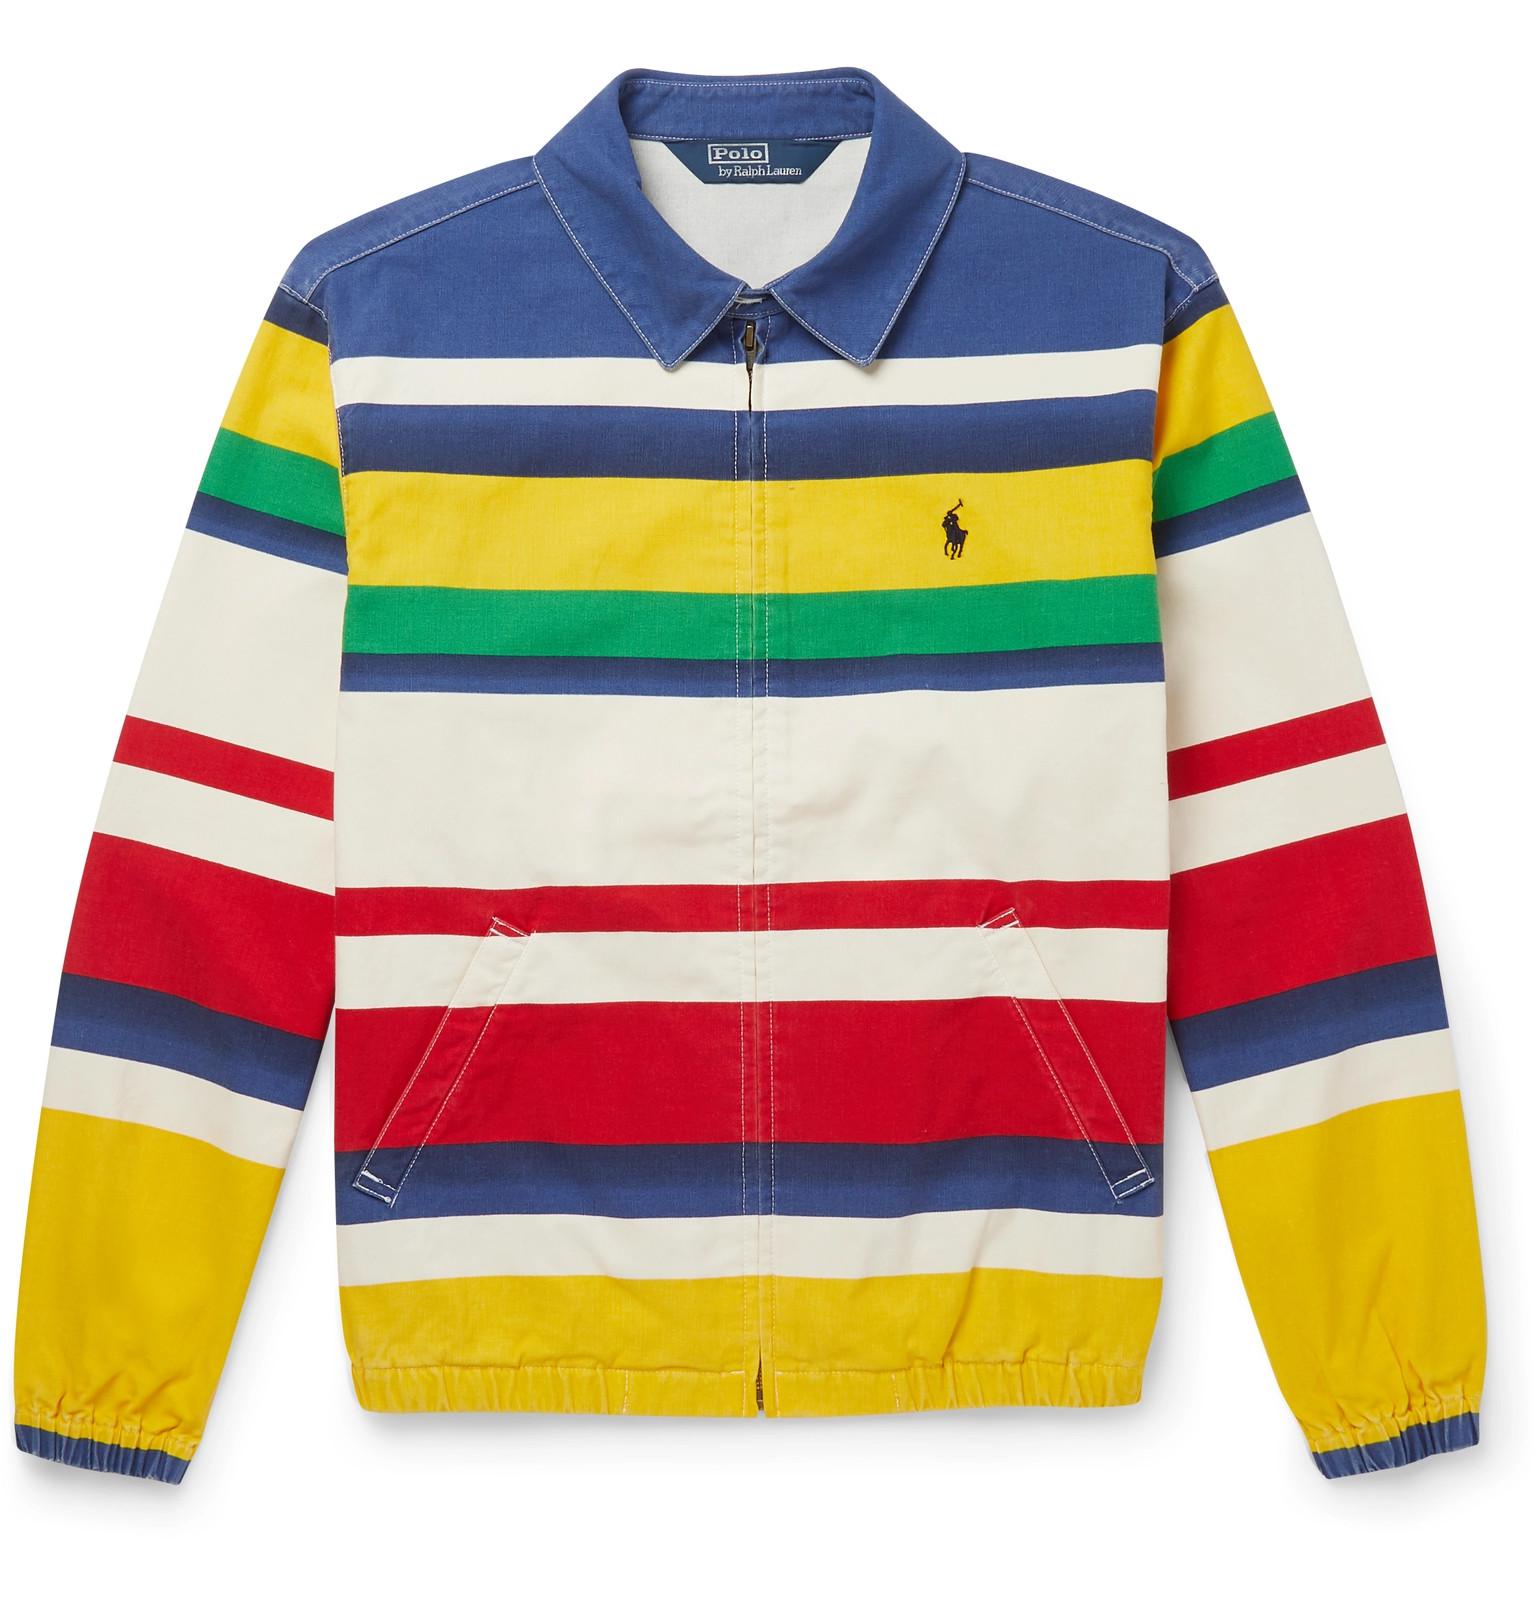 Polo Ralph Lauren Striped Cotton Blouson Jacket in Blue for Men - Lyst